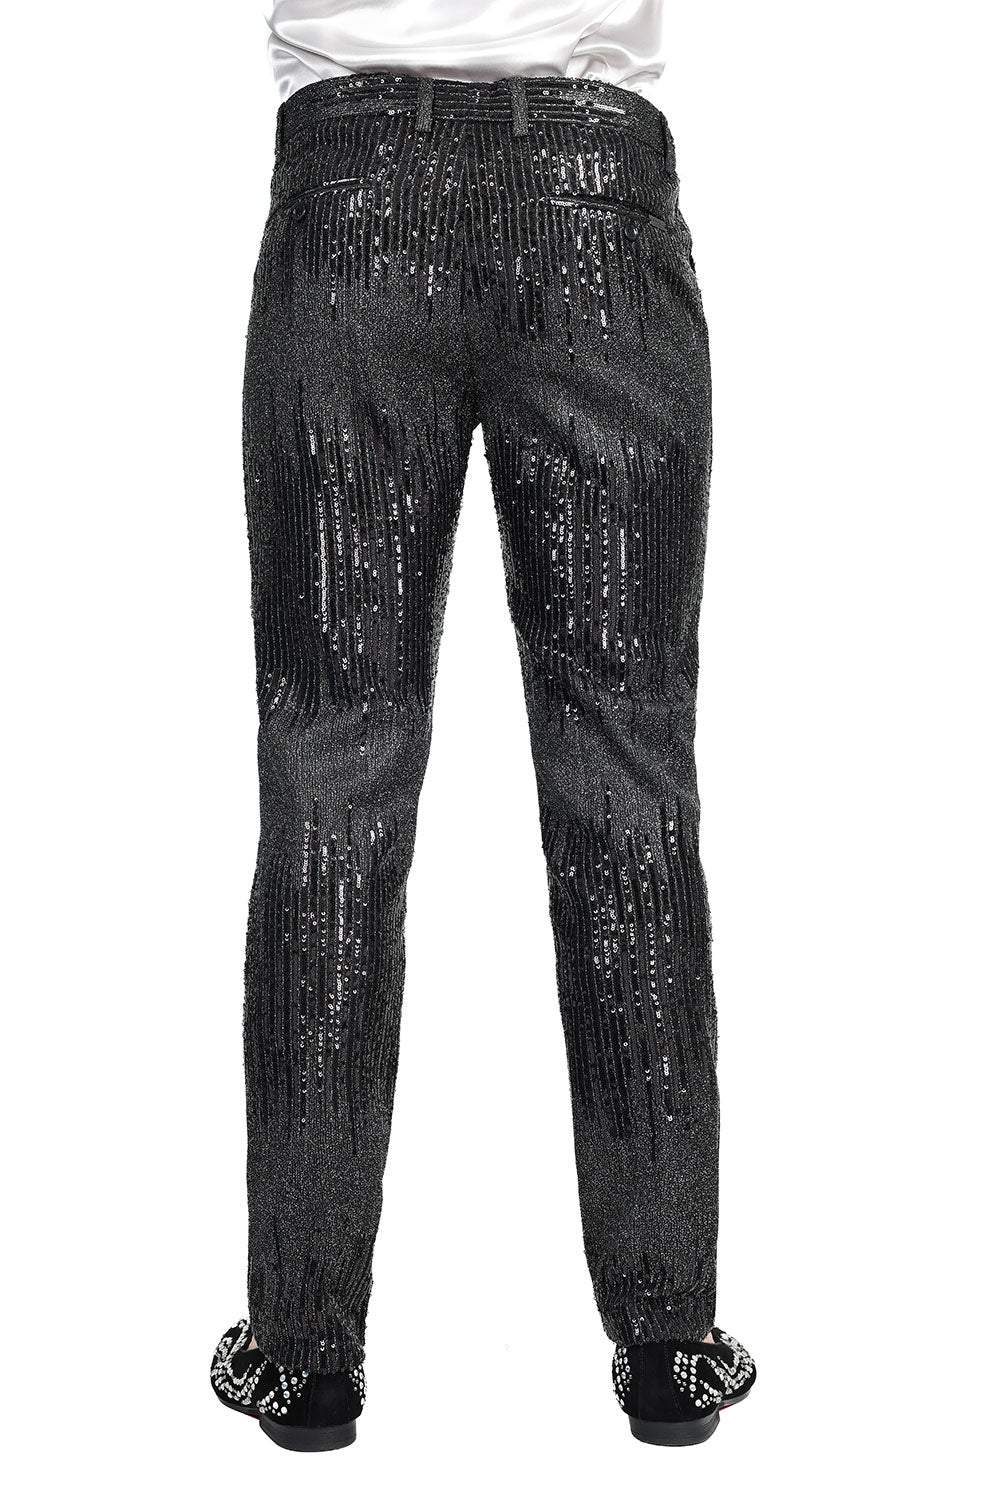 BARABAS Men's Rhinestone Sequin Design Shiny Luxury Pants CP3085 Black